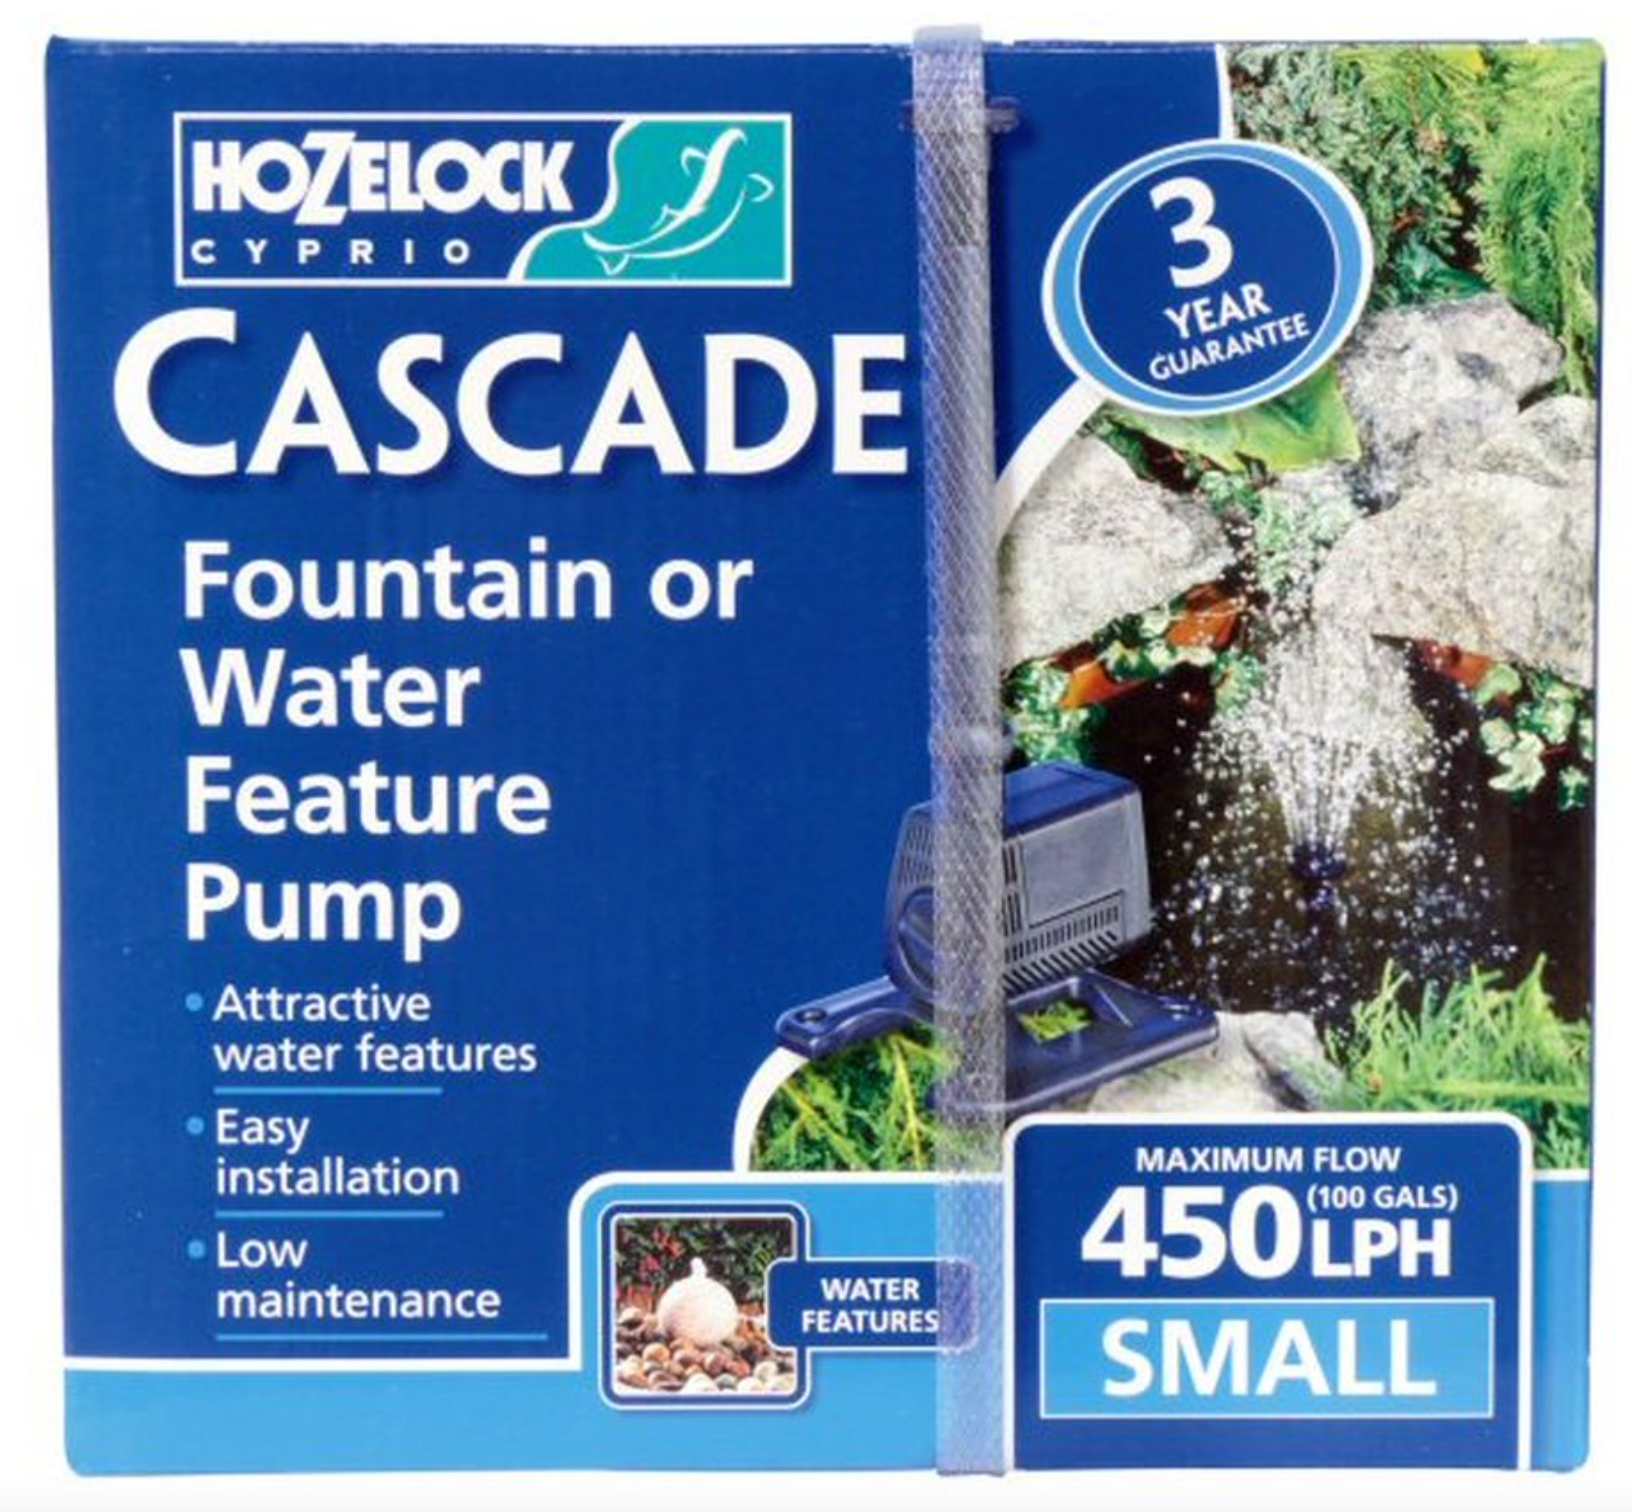 Hozelock Cascade Fountain and Waterfall Pump